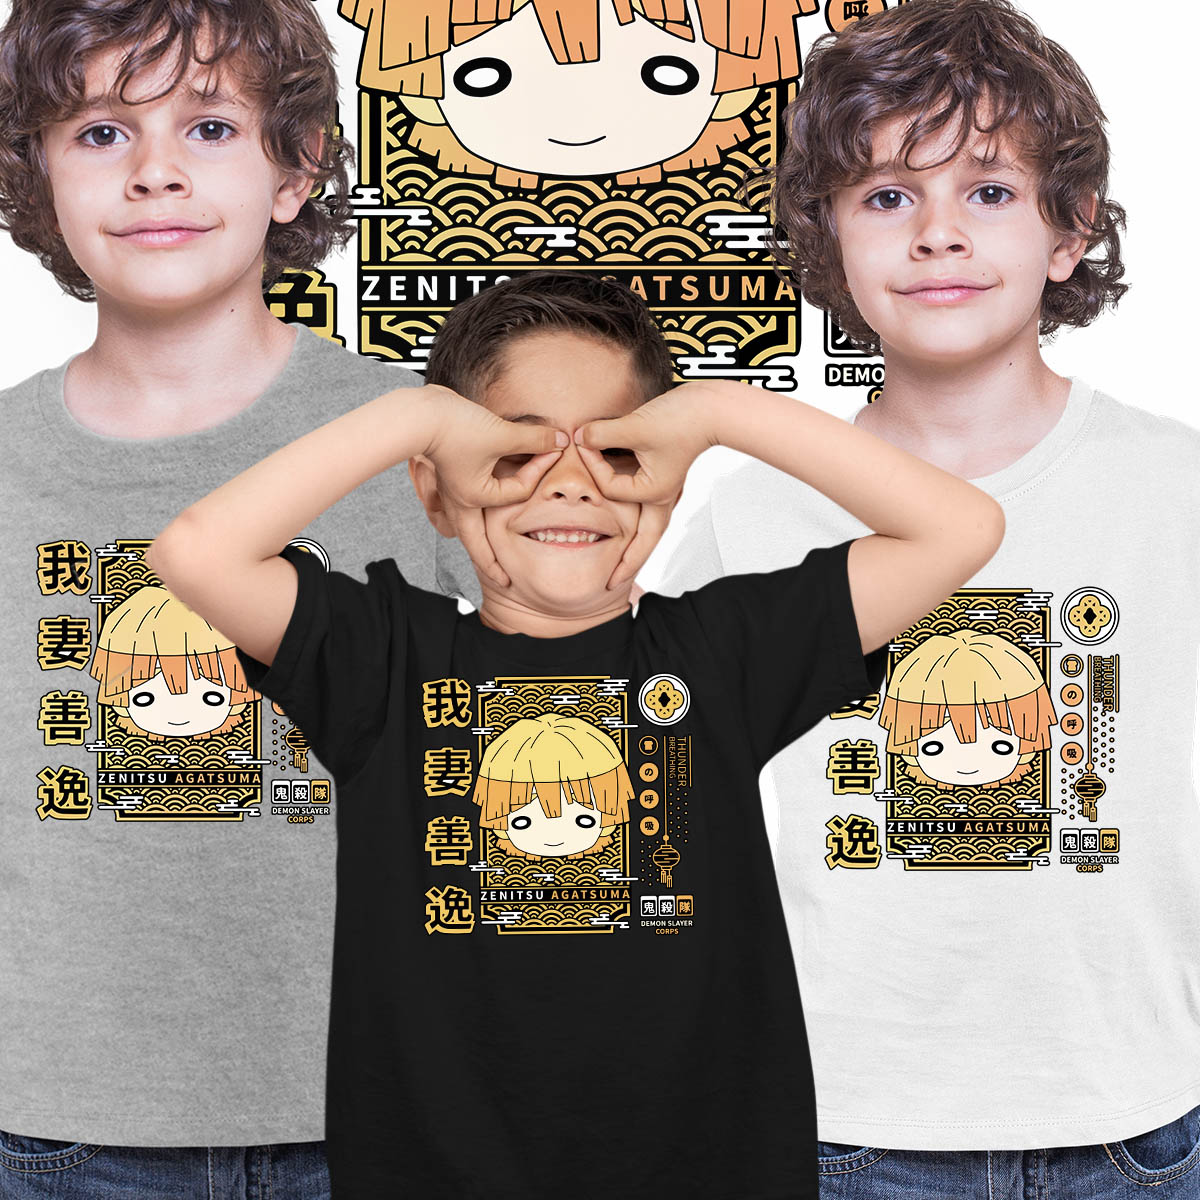 Zenitsu Agatsuma Demon Slayer Corps Anime Manga T-shirt for Kids